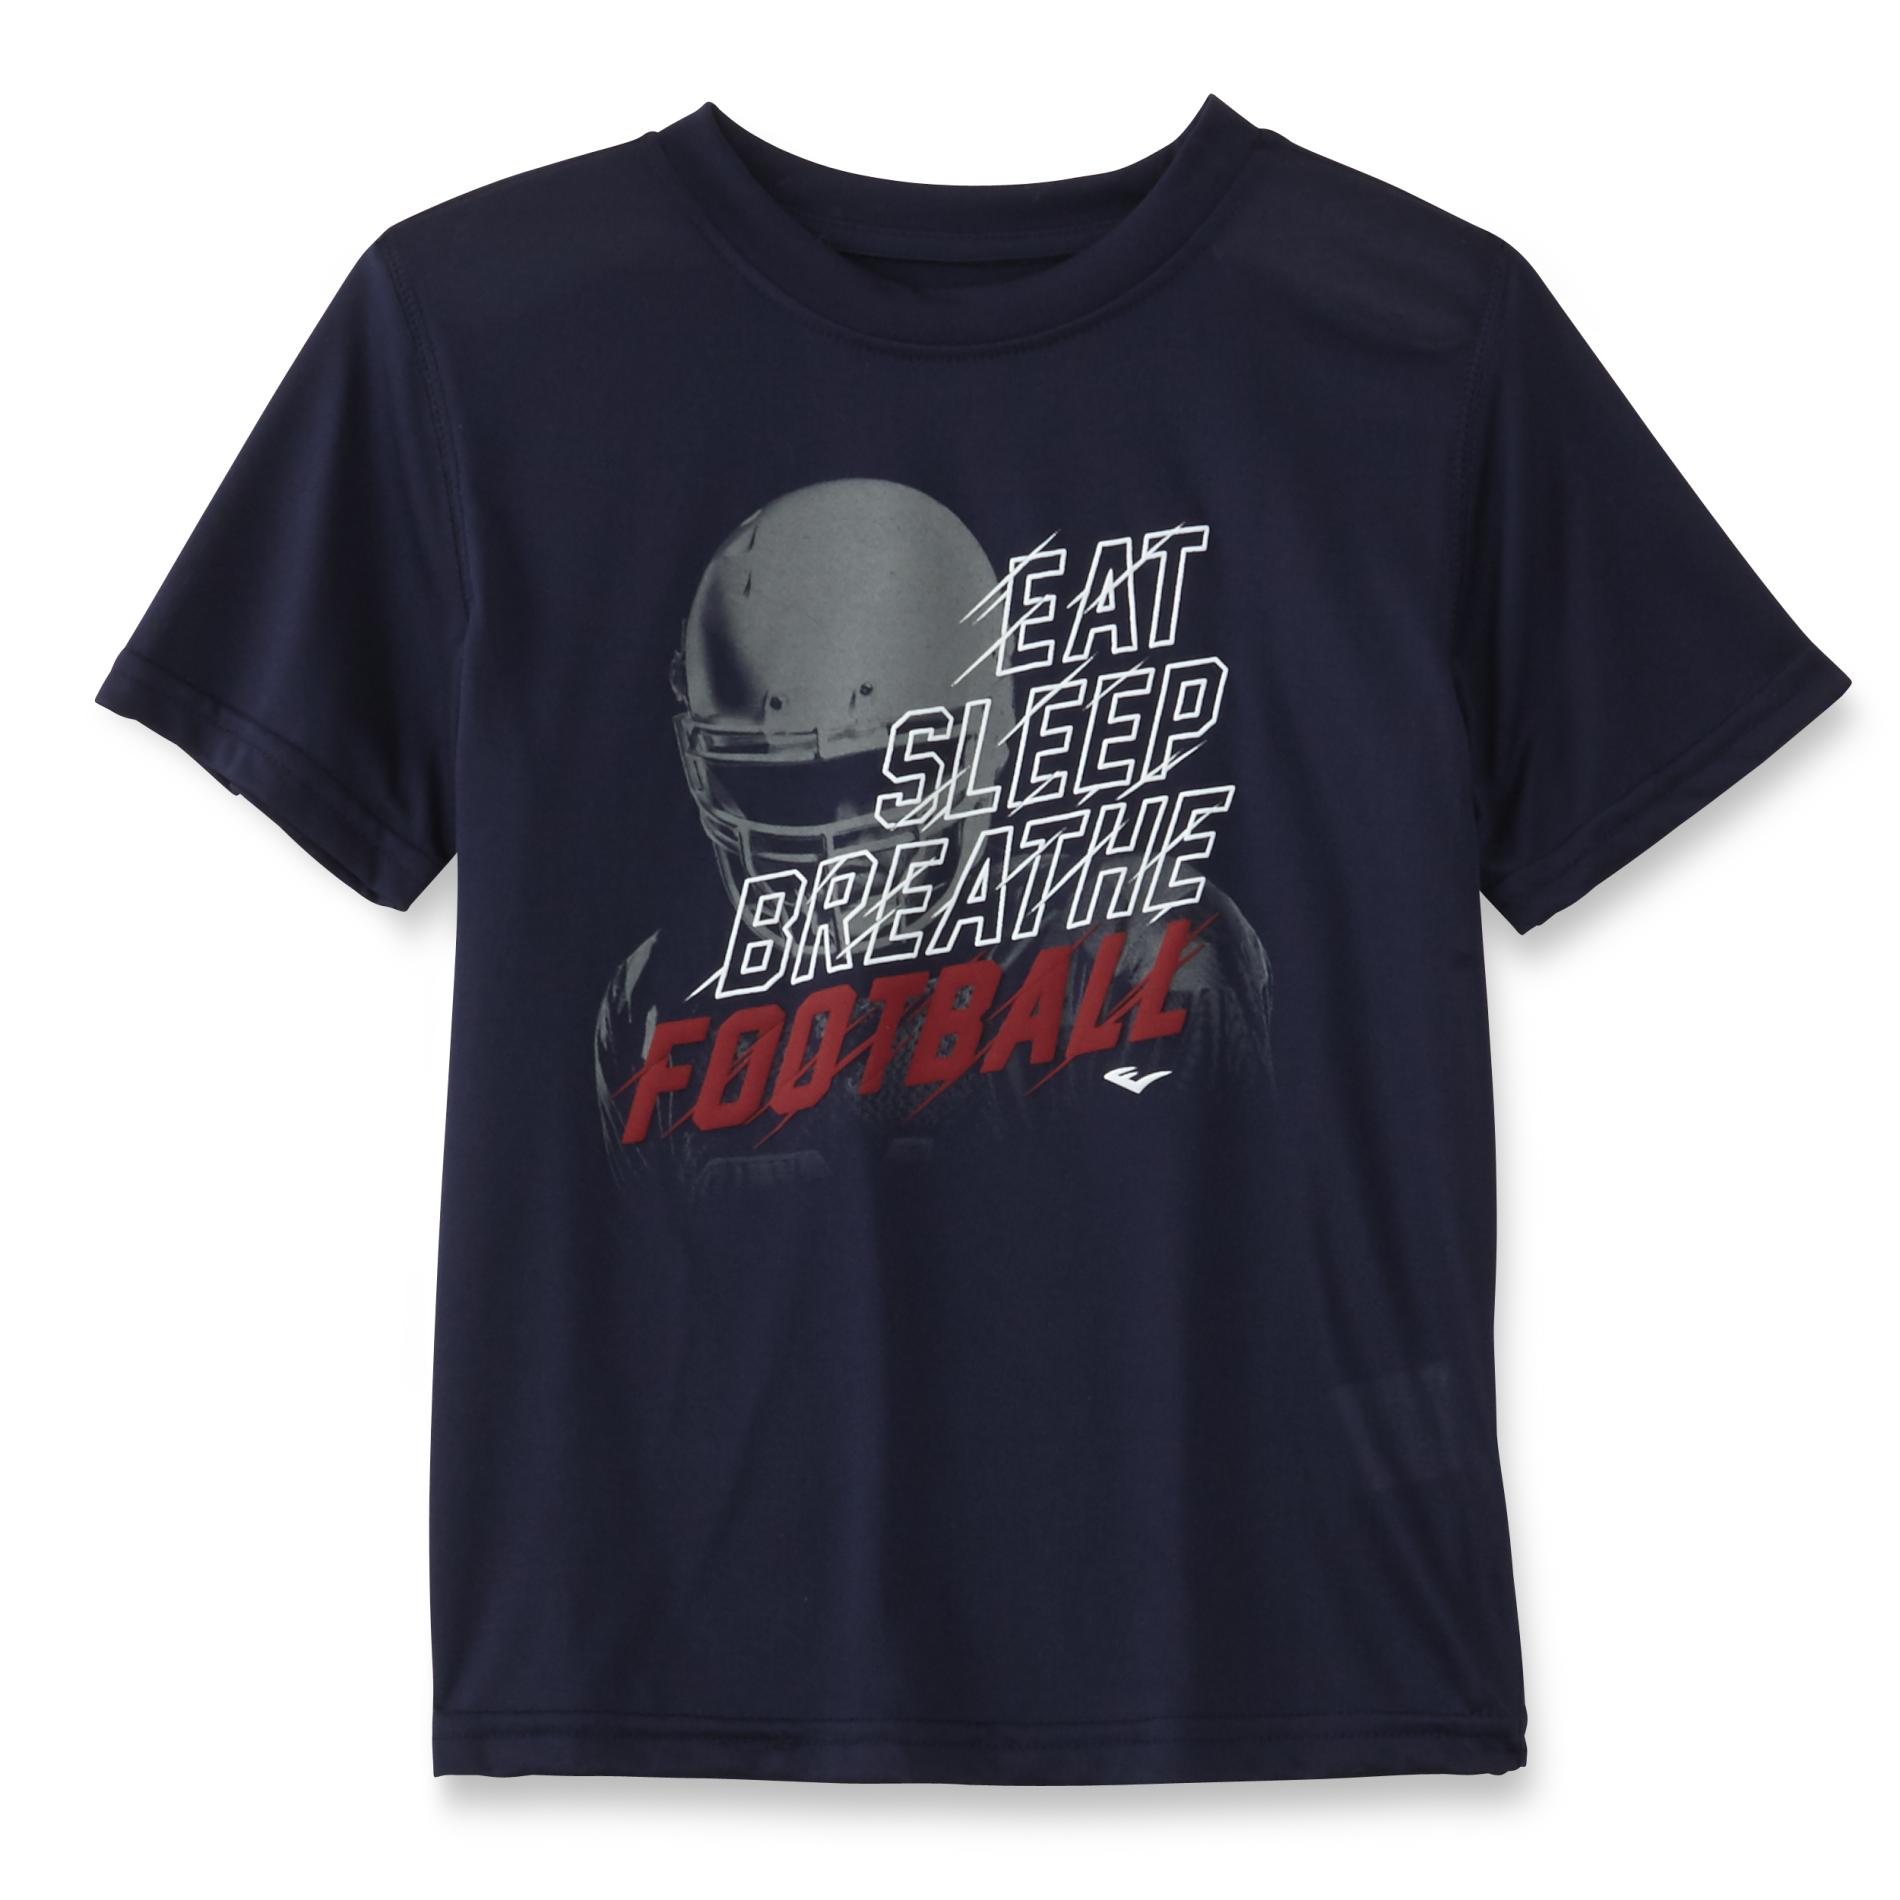 Everlast&reg; Boy's Graphic Athletic Shirt - Football